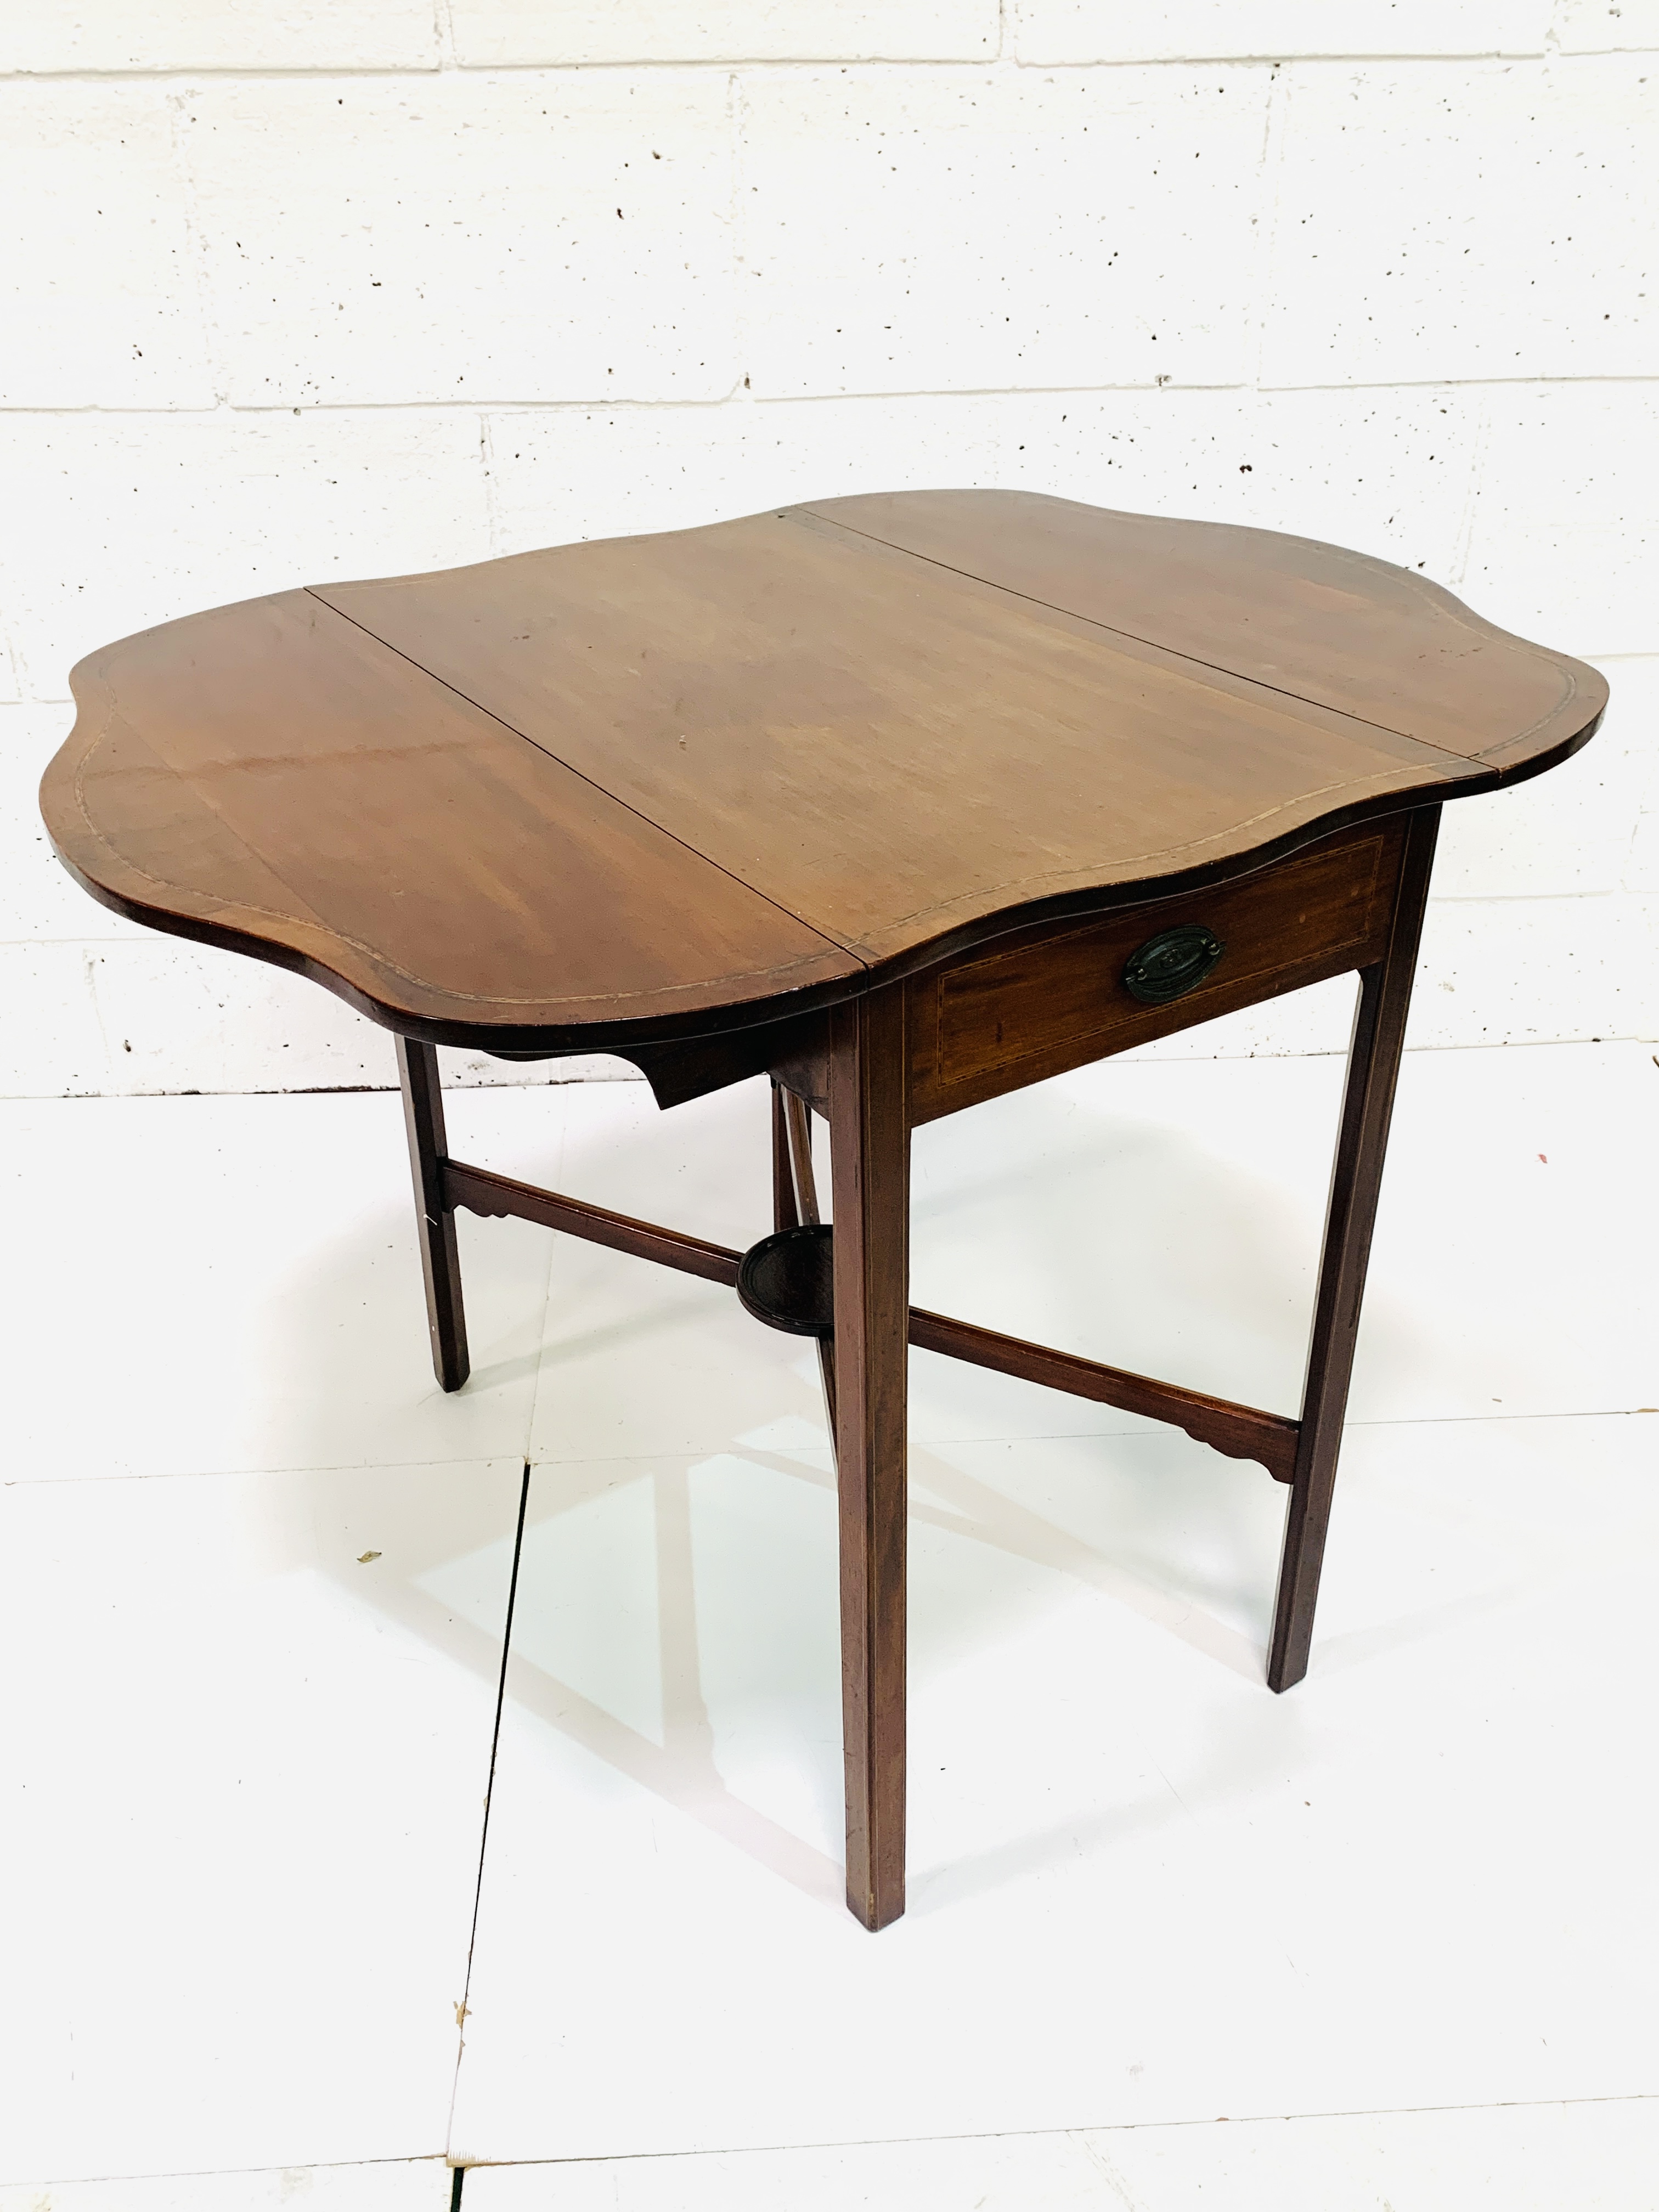 Inlaid mahogany shaped edge drop-side table - Image 2 of 4